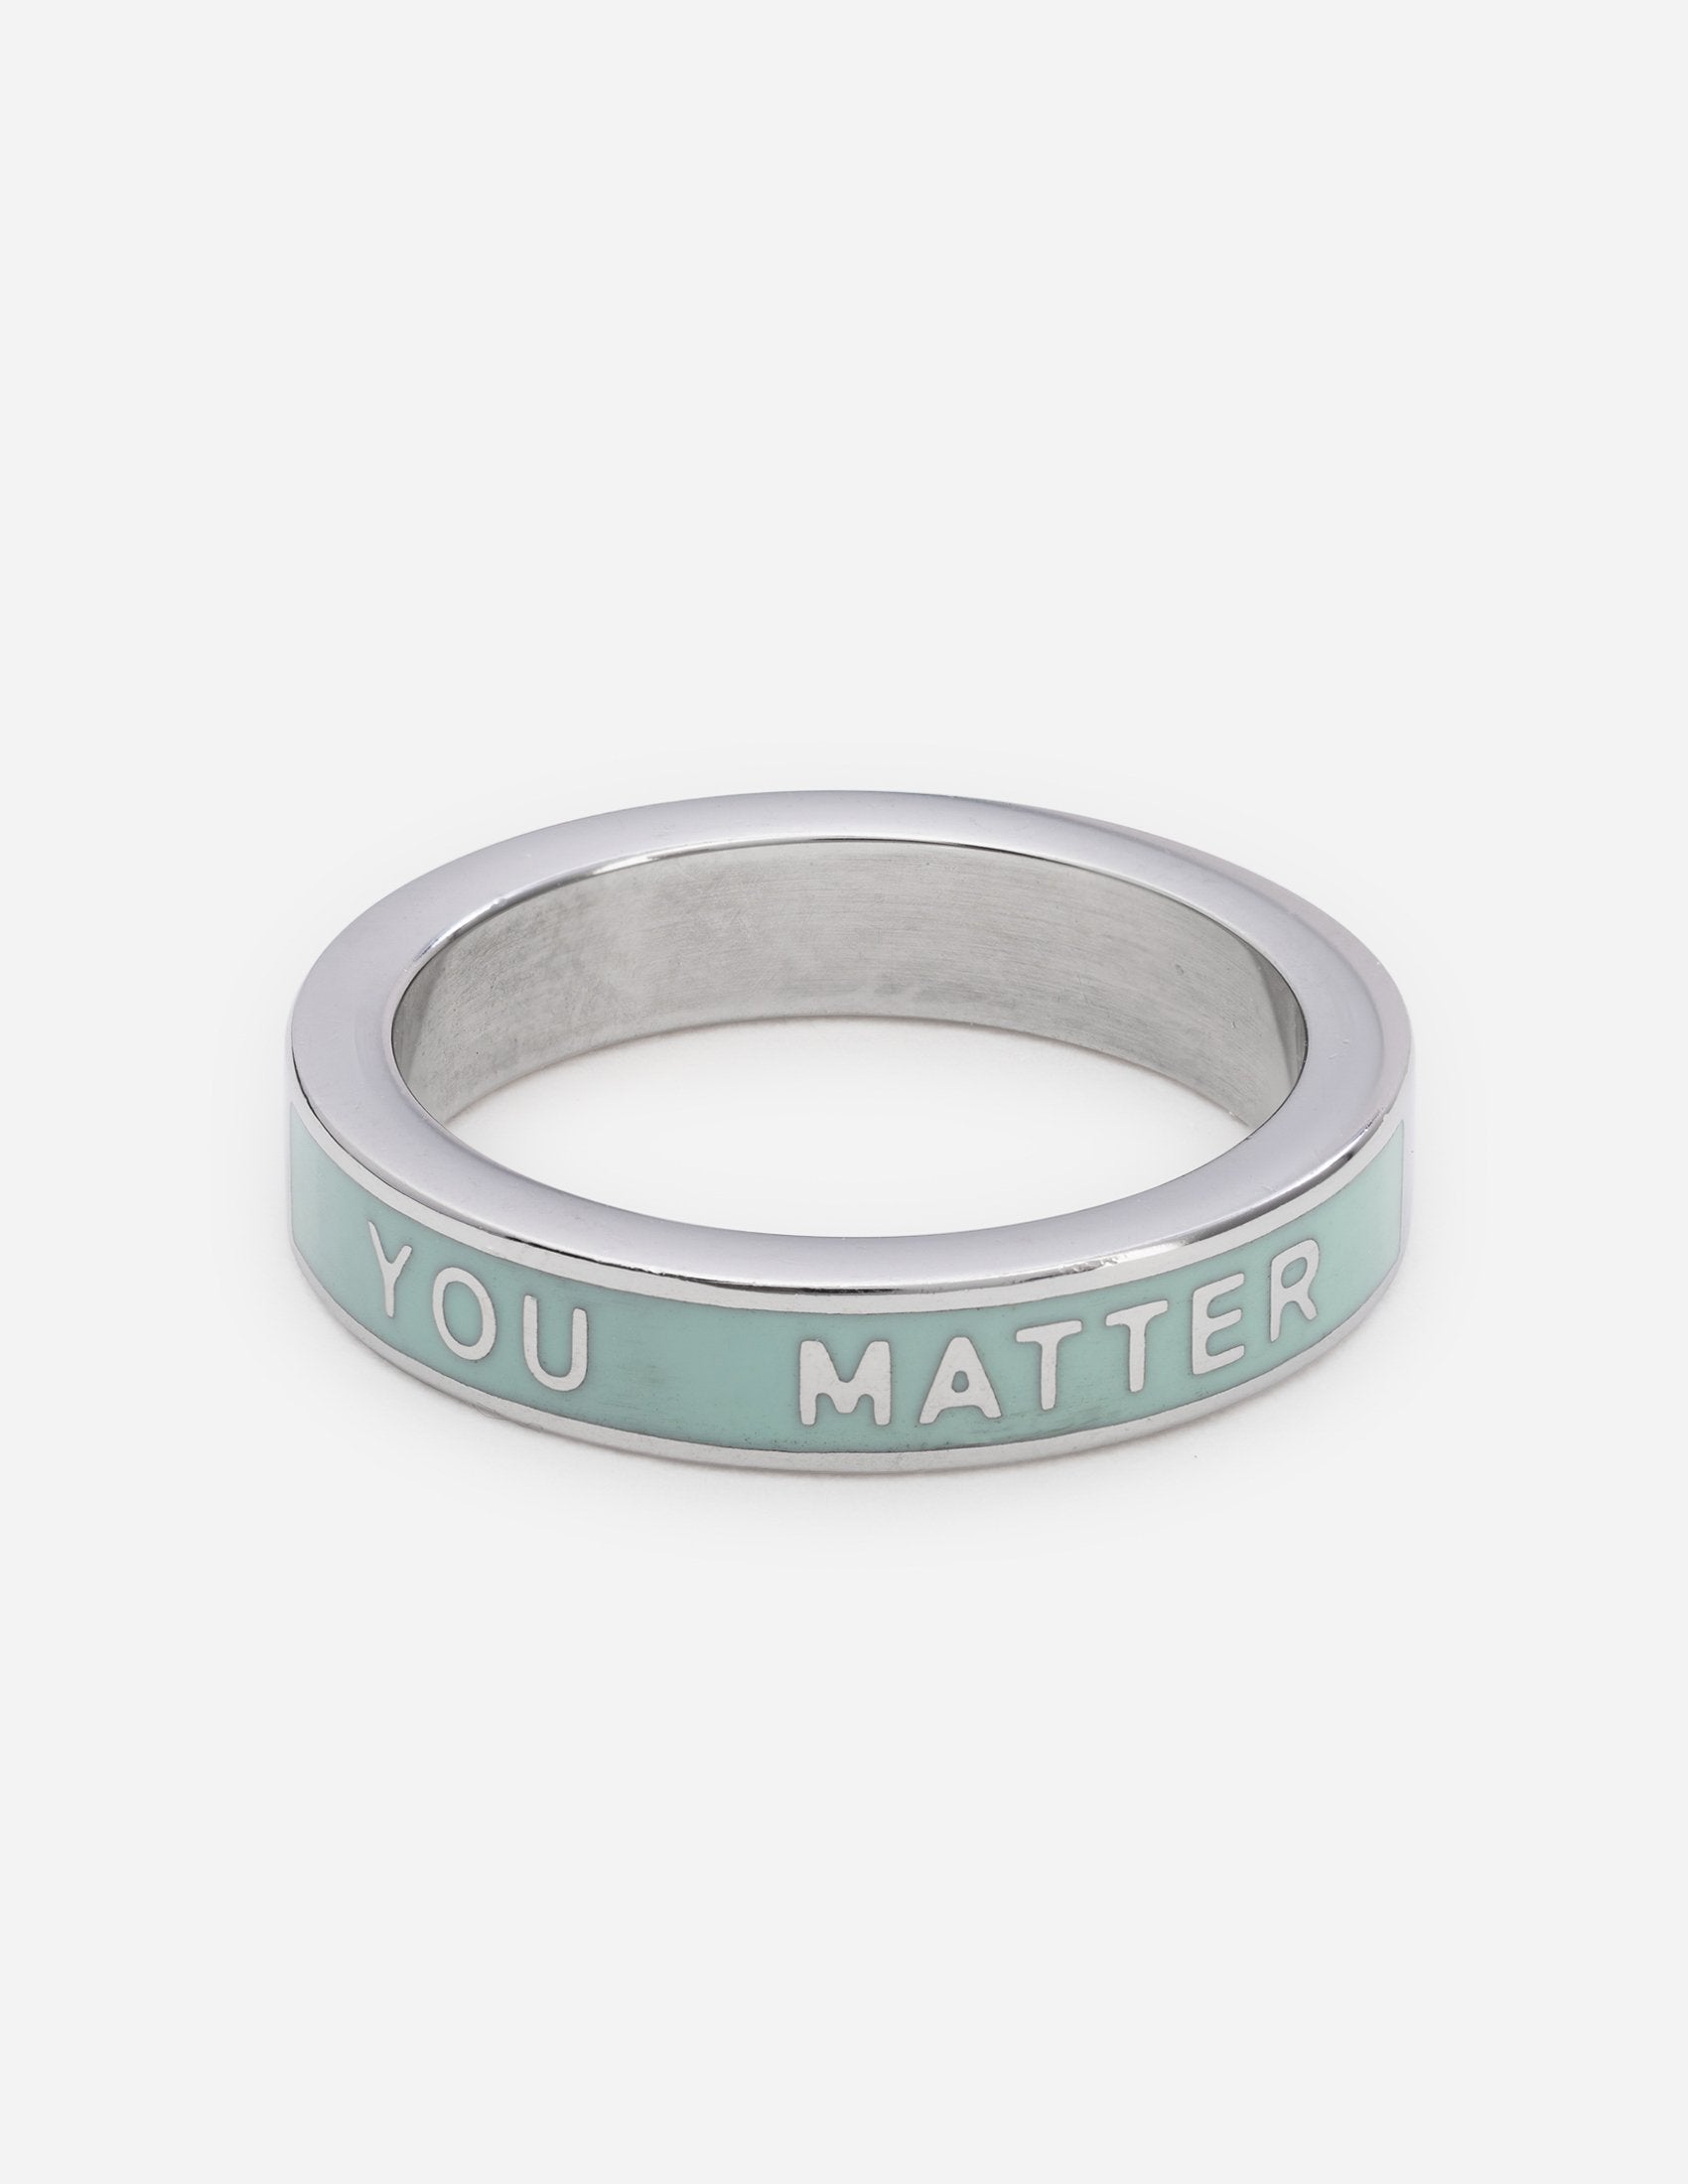 Buy You Matter Bracelet Online In India  Etsy India